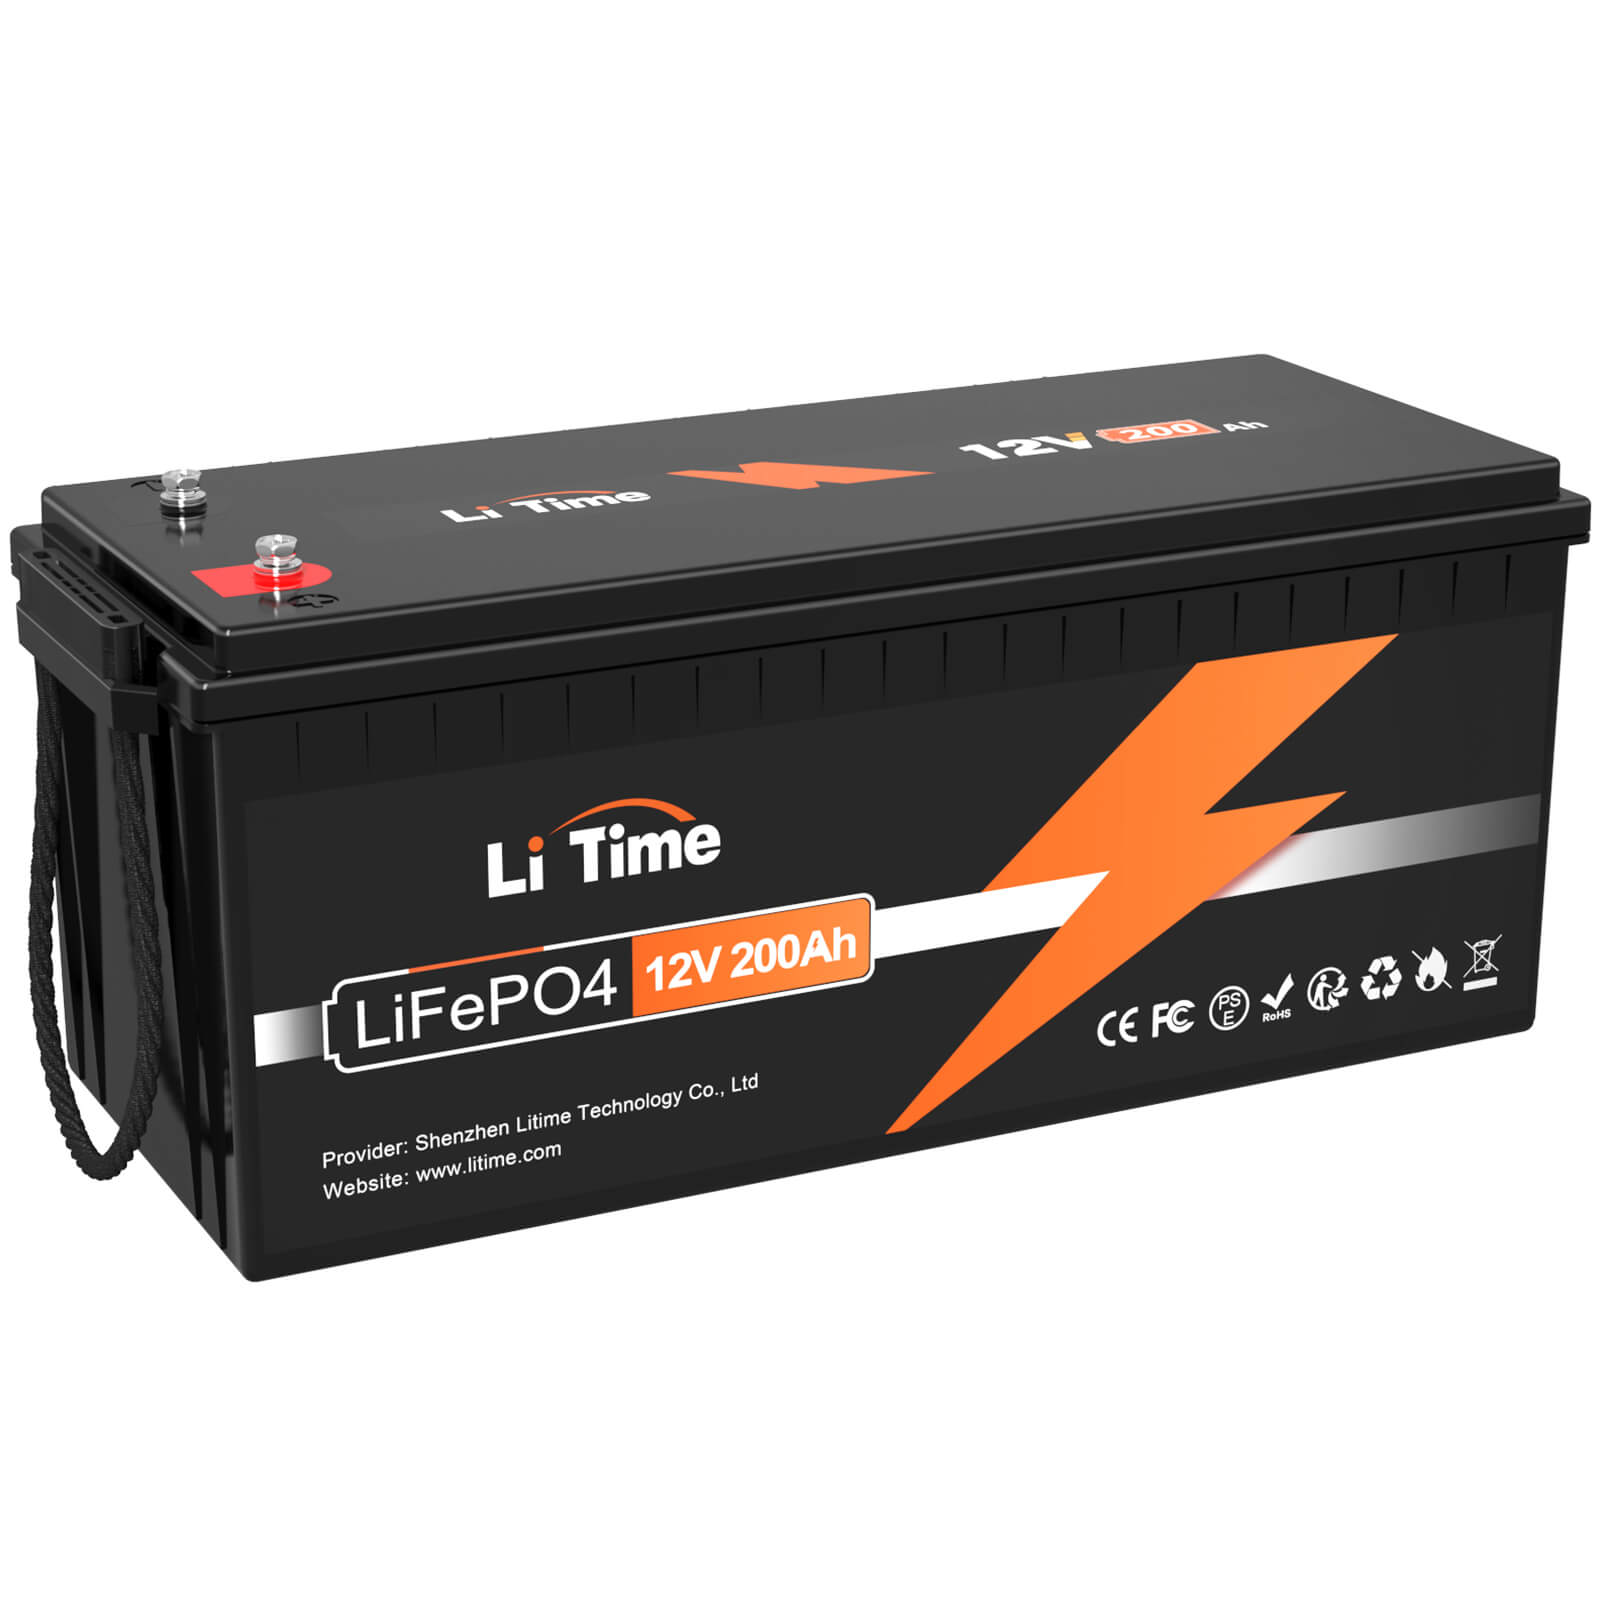 LiTime LiFePO4 200Ah Plus 12V Lithium Batterie Eingebautes 200A